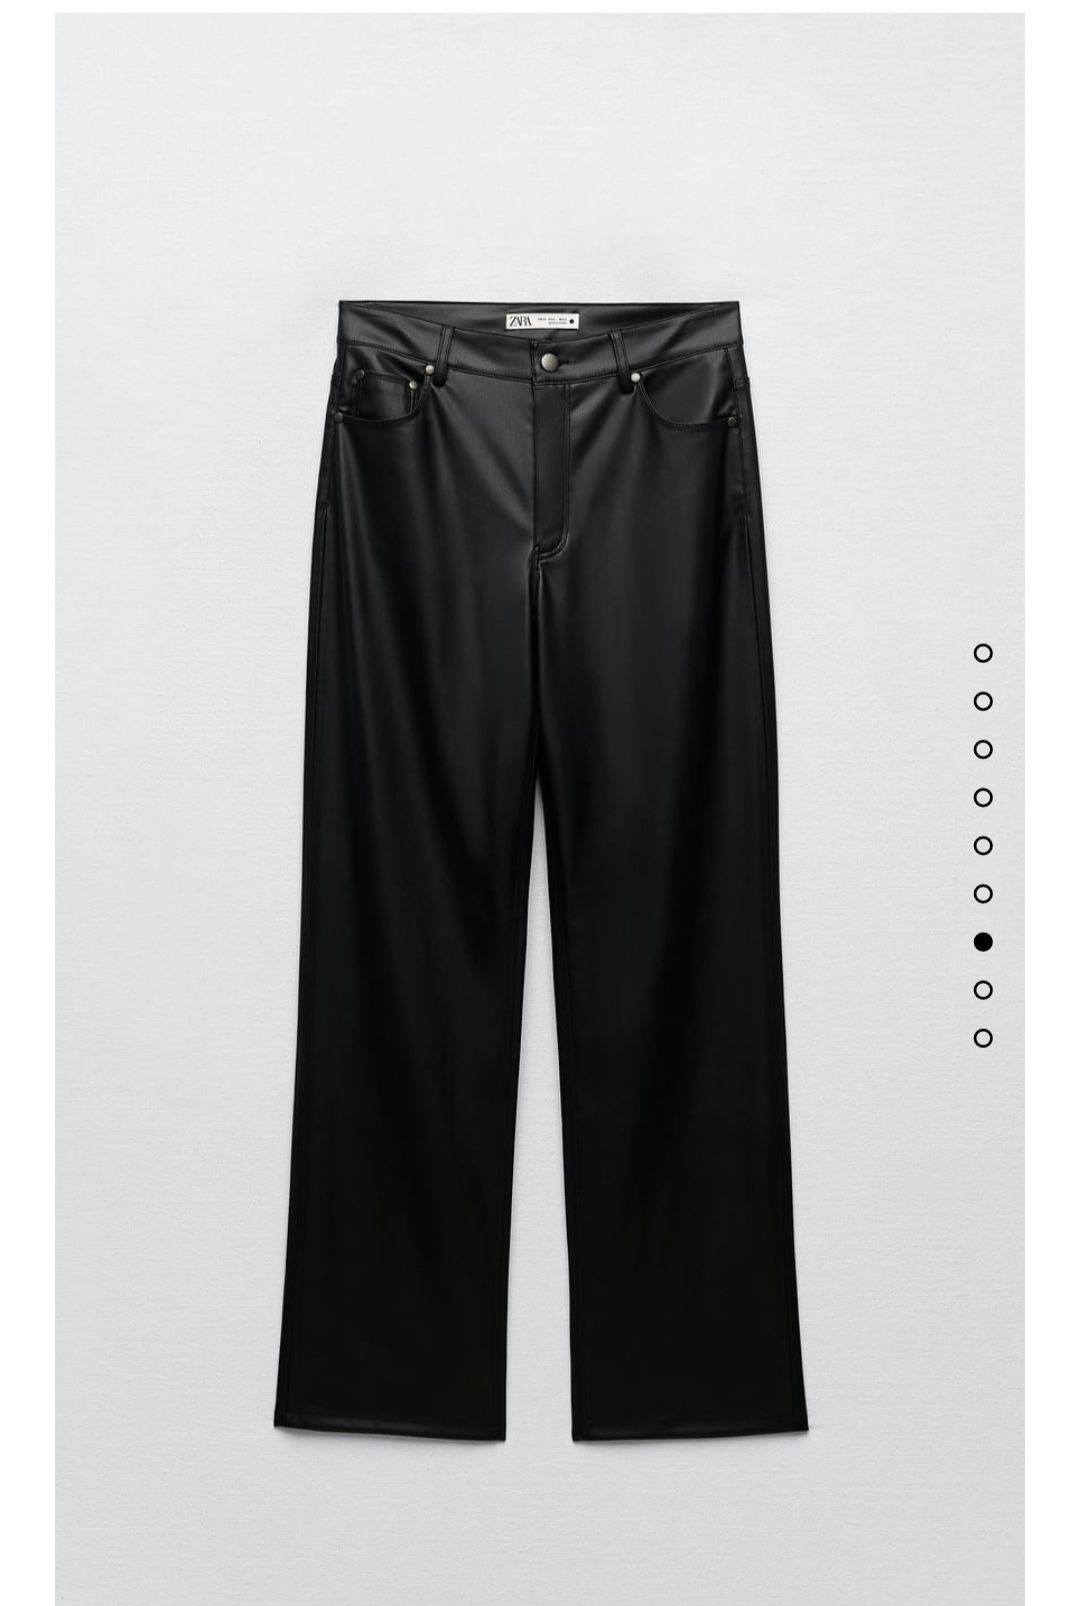 Нов панталон Zara S размер